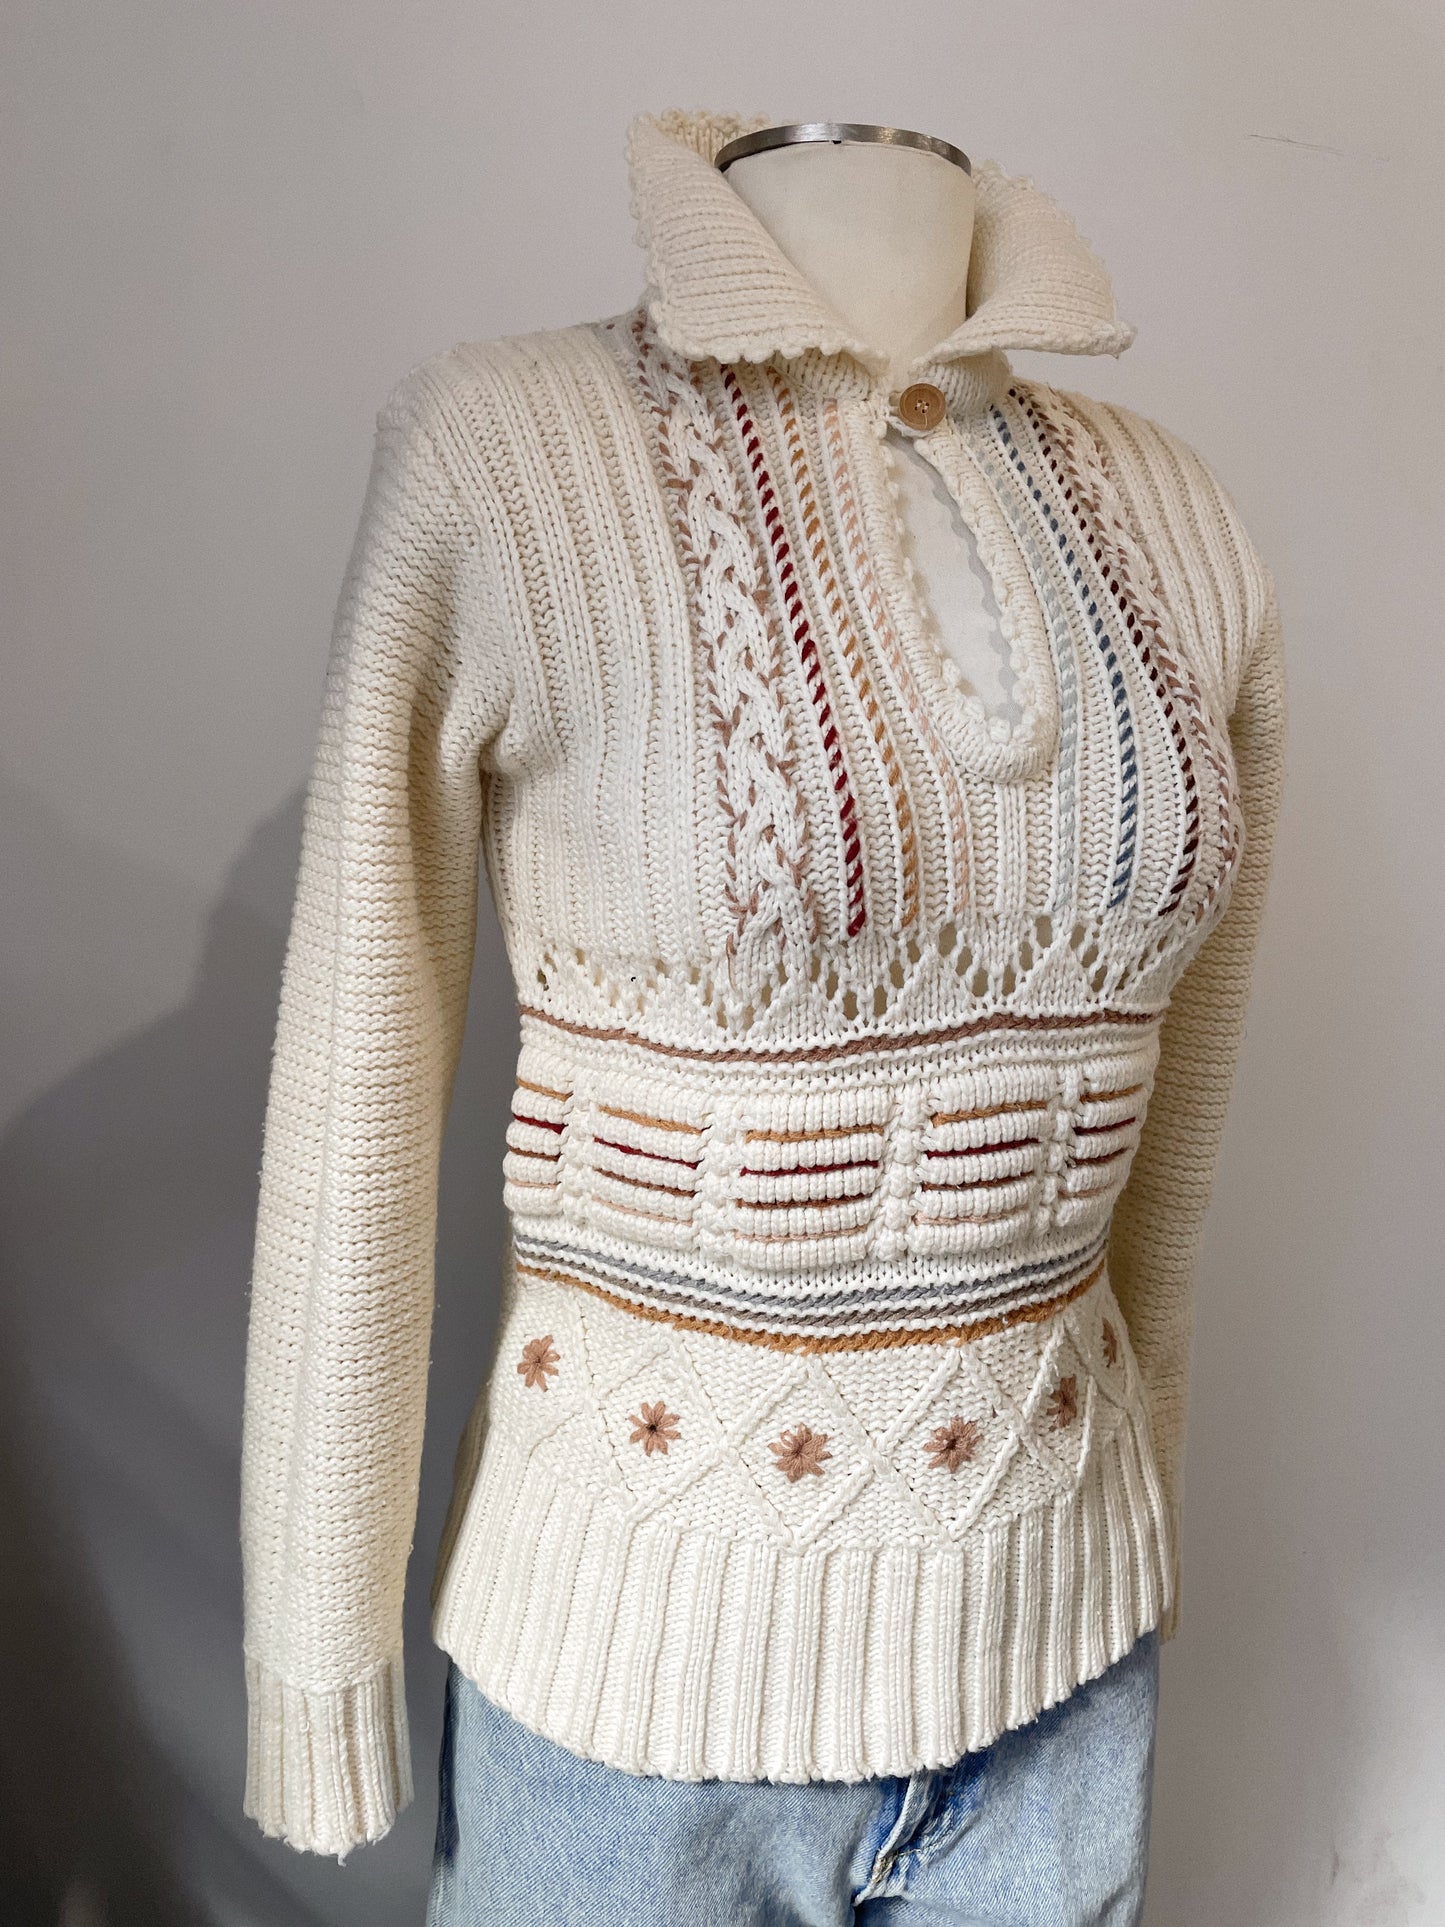 70s-Inspired Farrah Keyhole Sweater